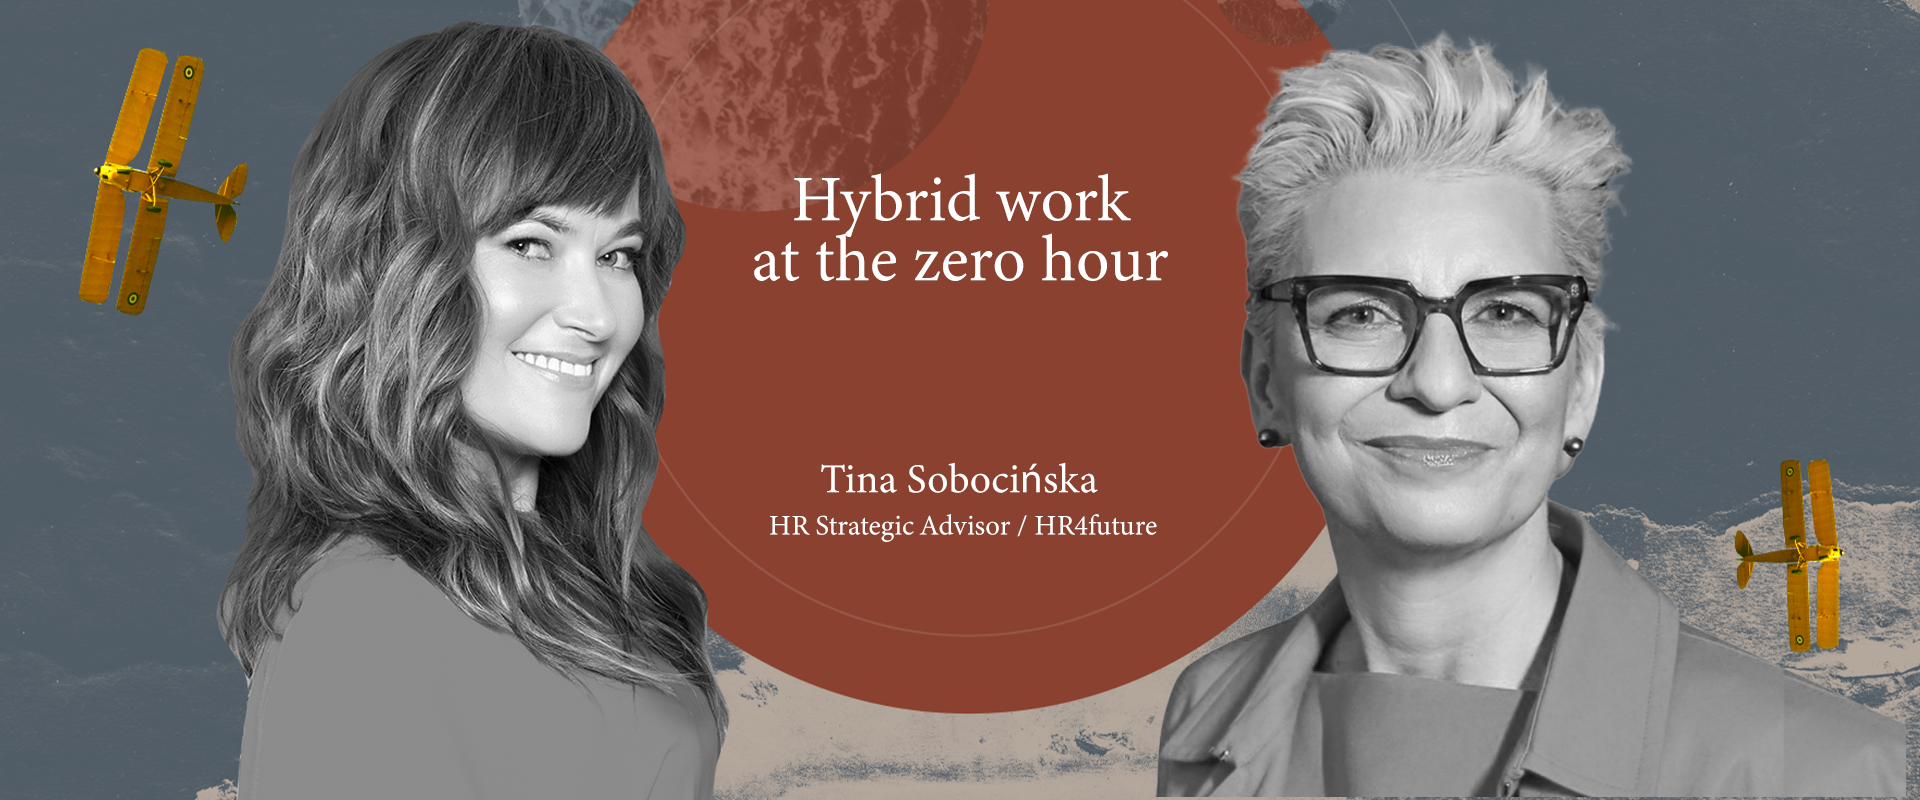 Hybrid work at the zero hour